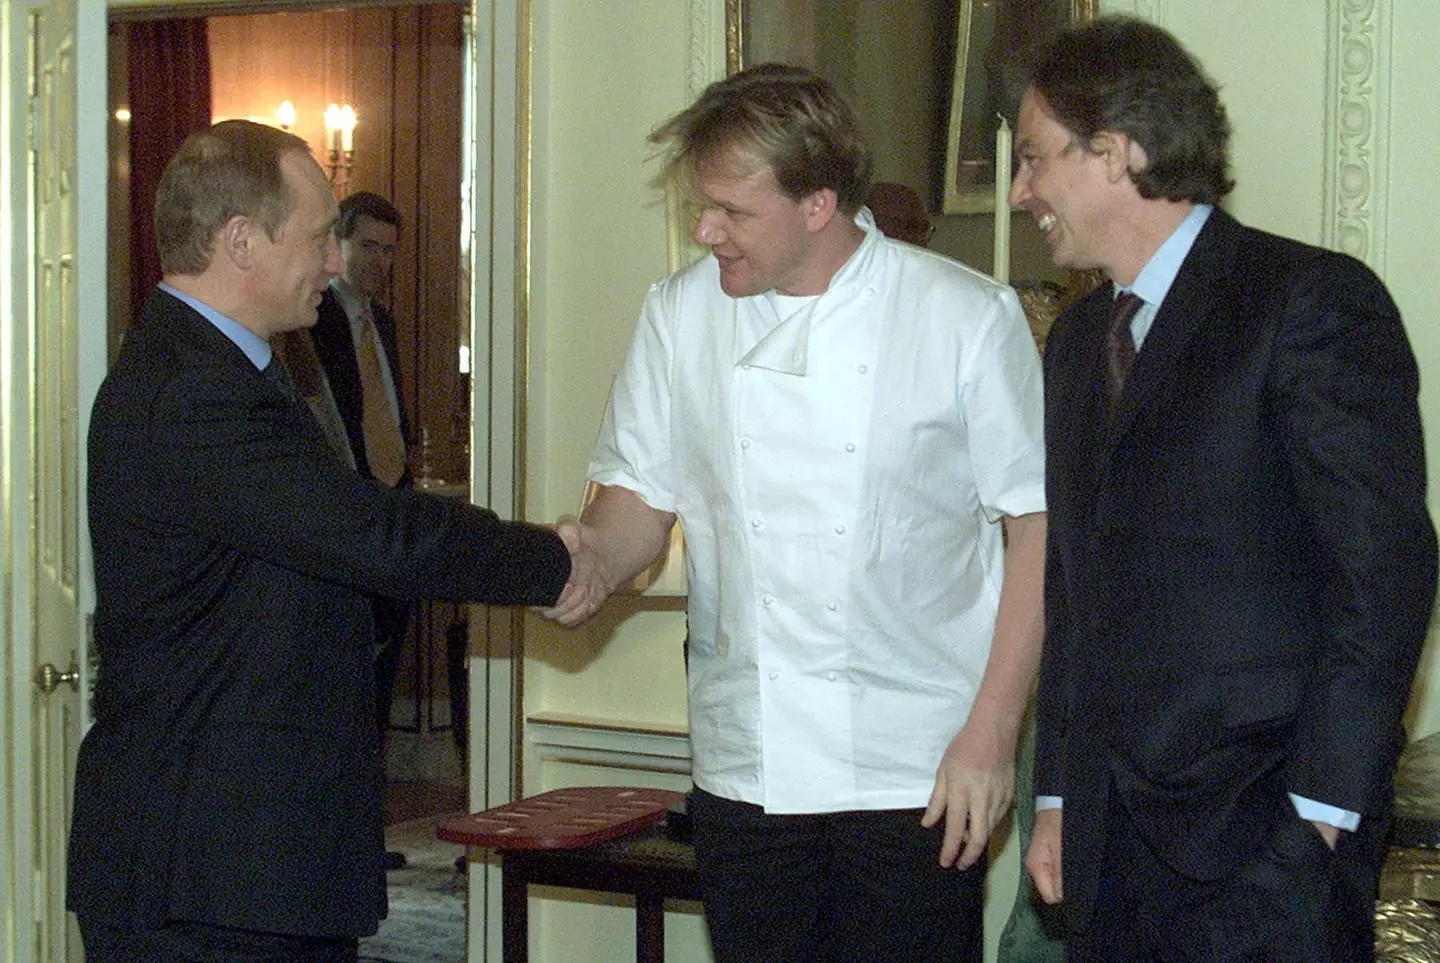 Gordon Ramsay cooked for Tony Blair and Vladimir Putin in 2000.